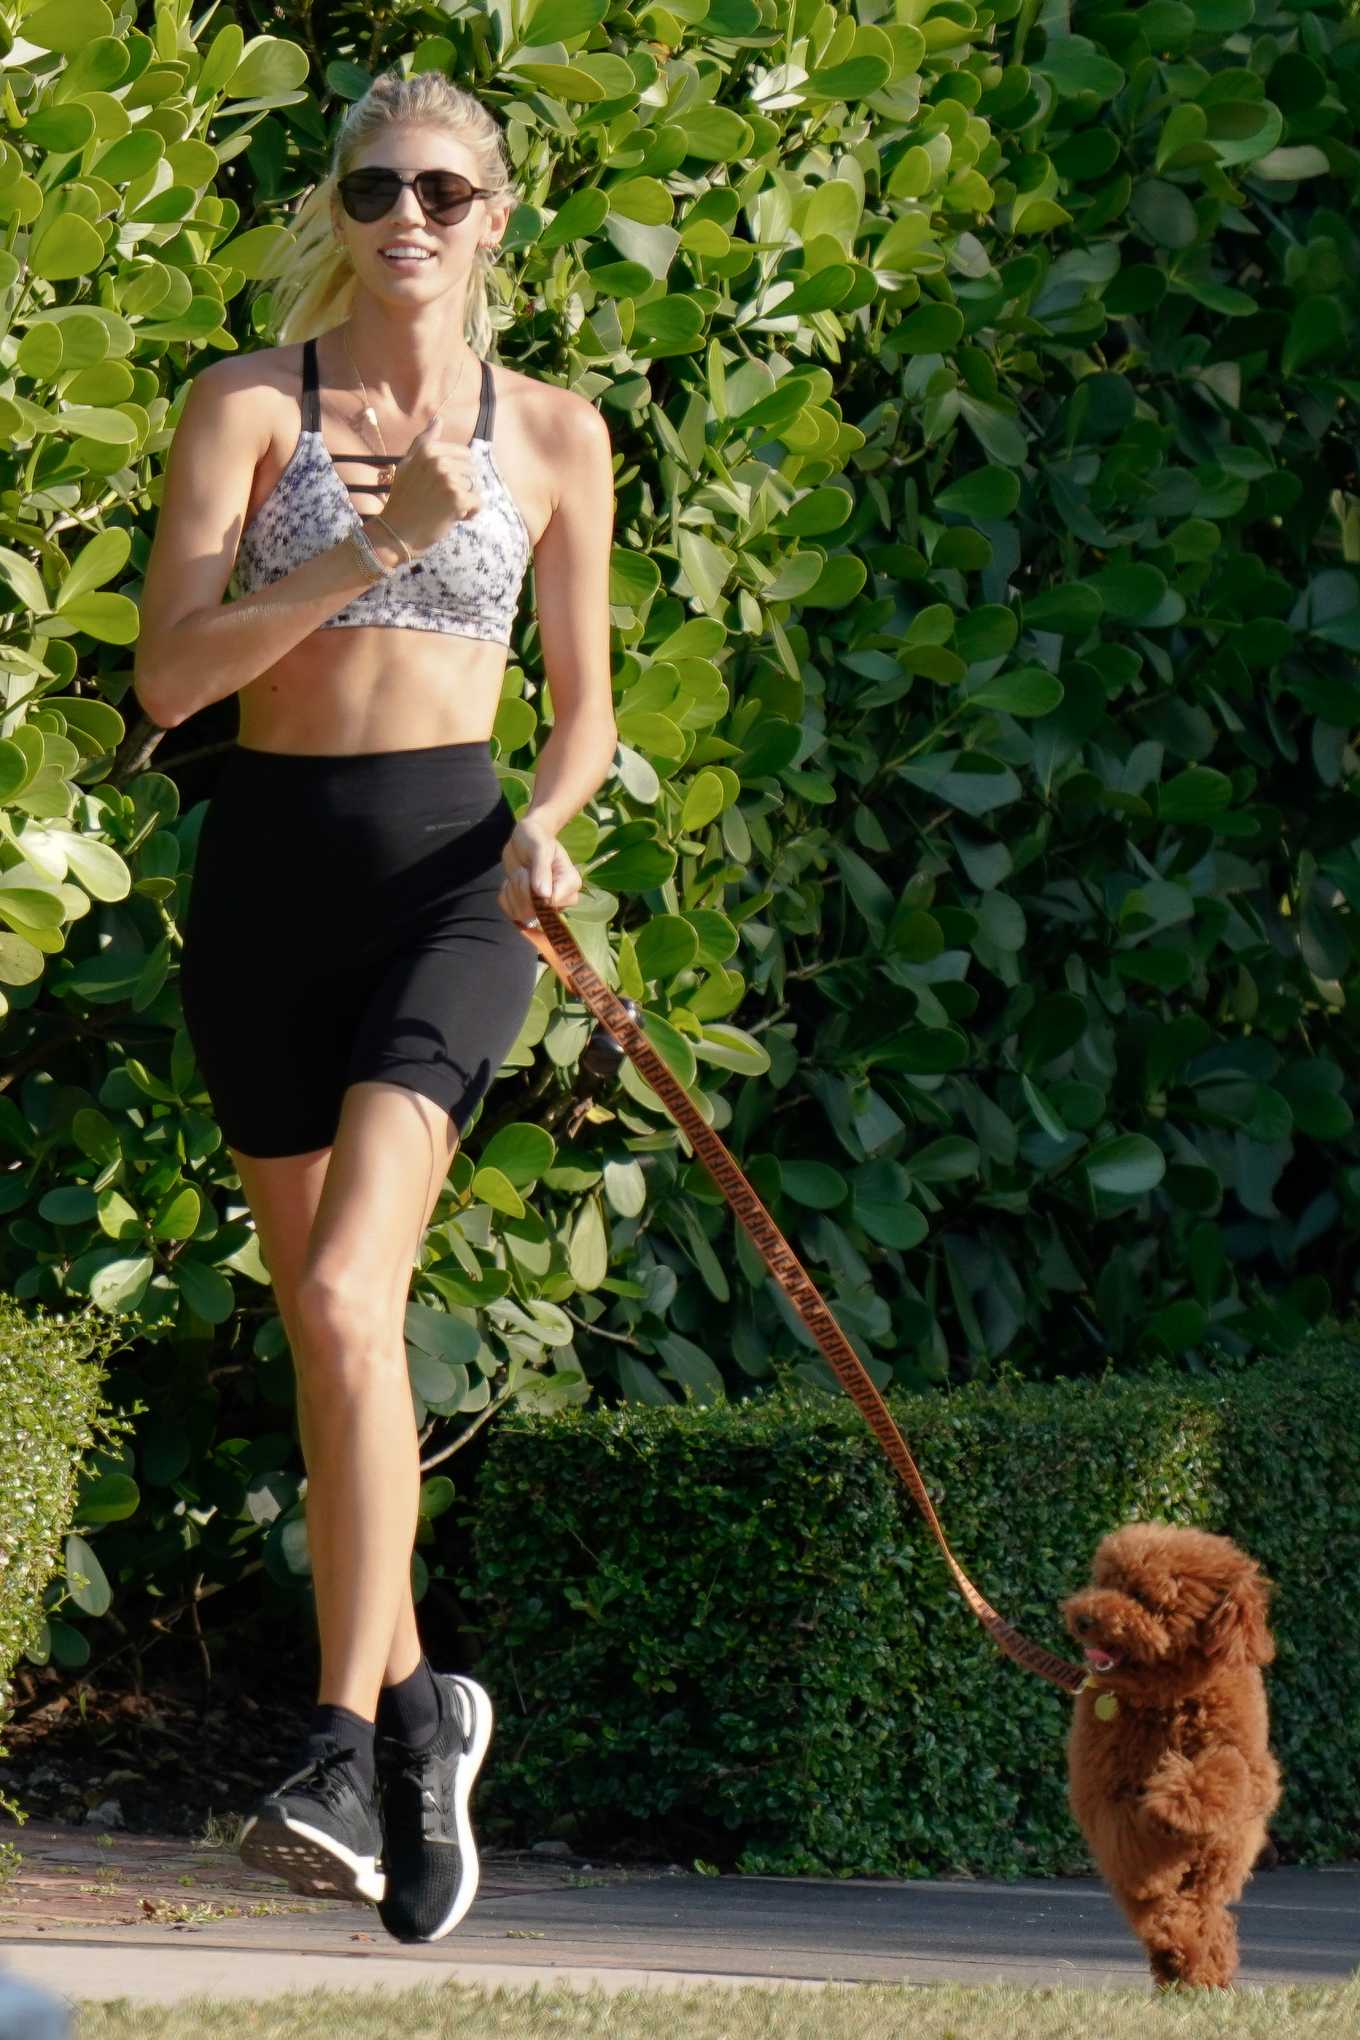 Devon Windsor â€“ Jogging while walking her dog in Miami